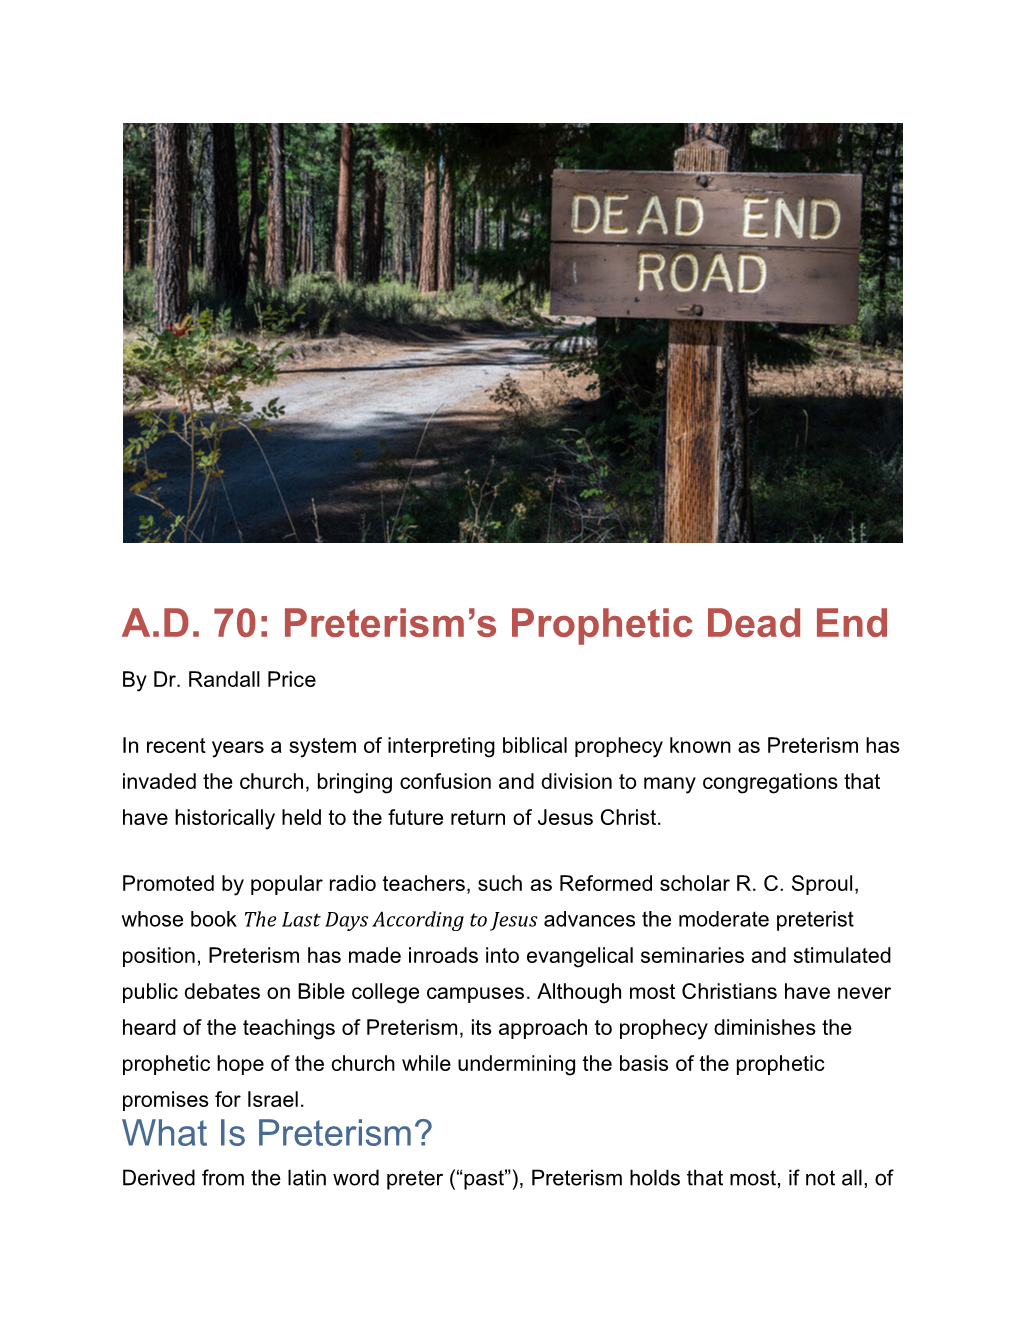 Preterism's Prophetic Dead